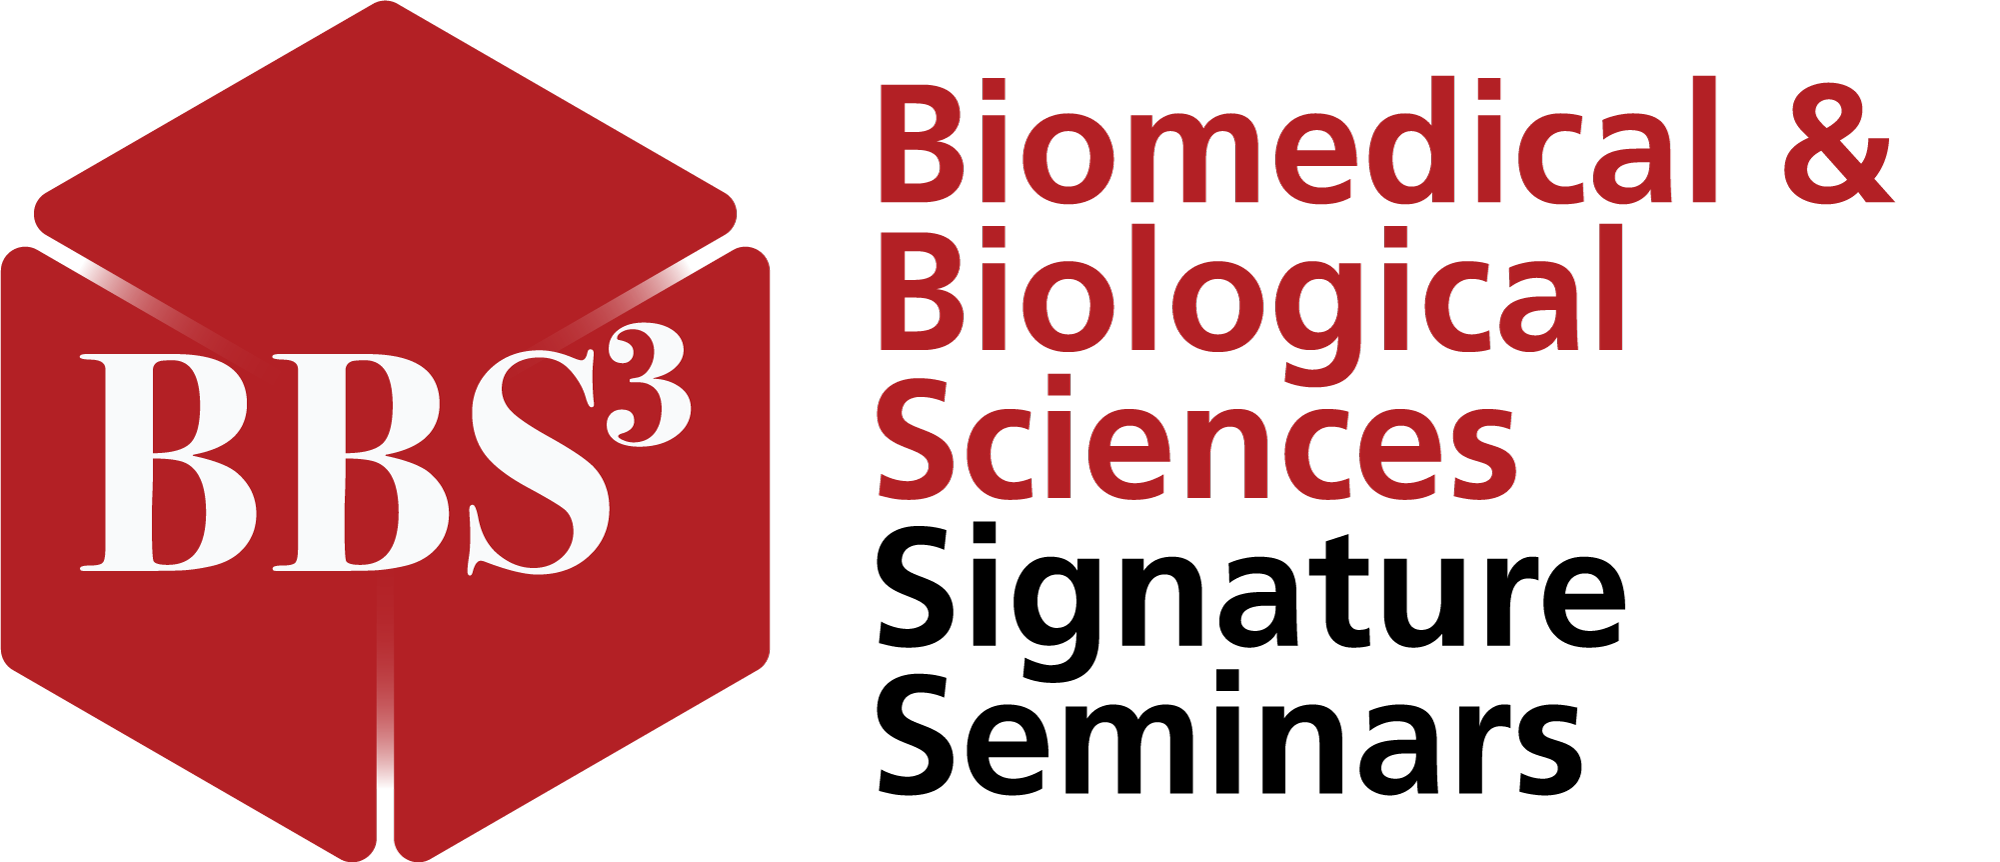 BBS3 Biomedical and Biological Sciences Signature Seminars 